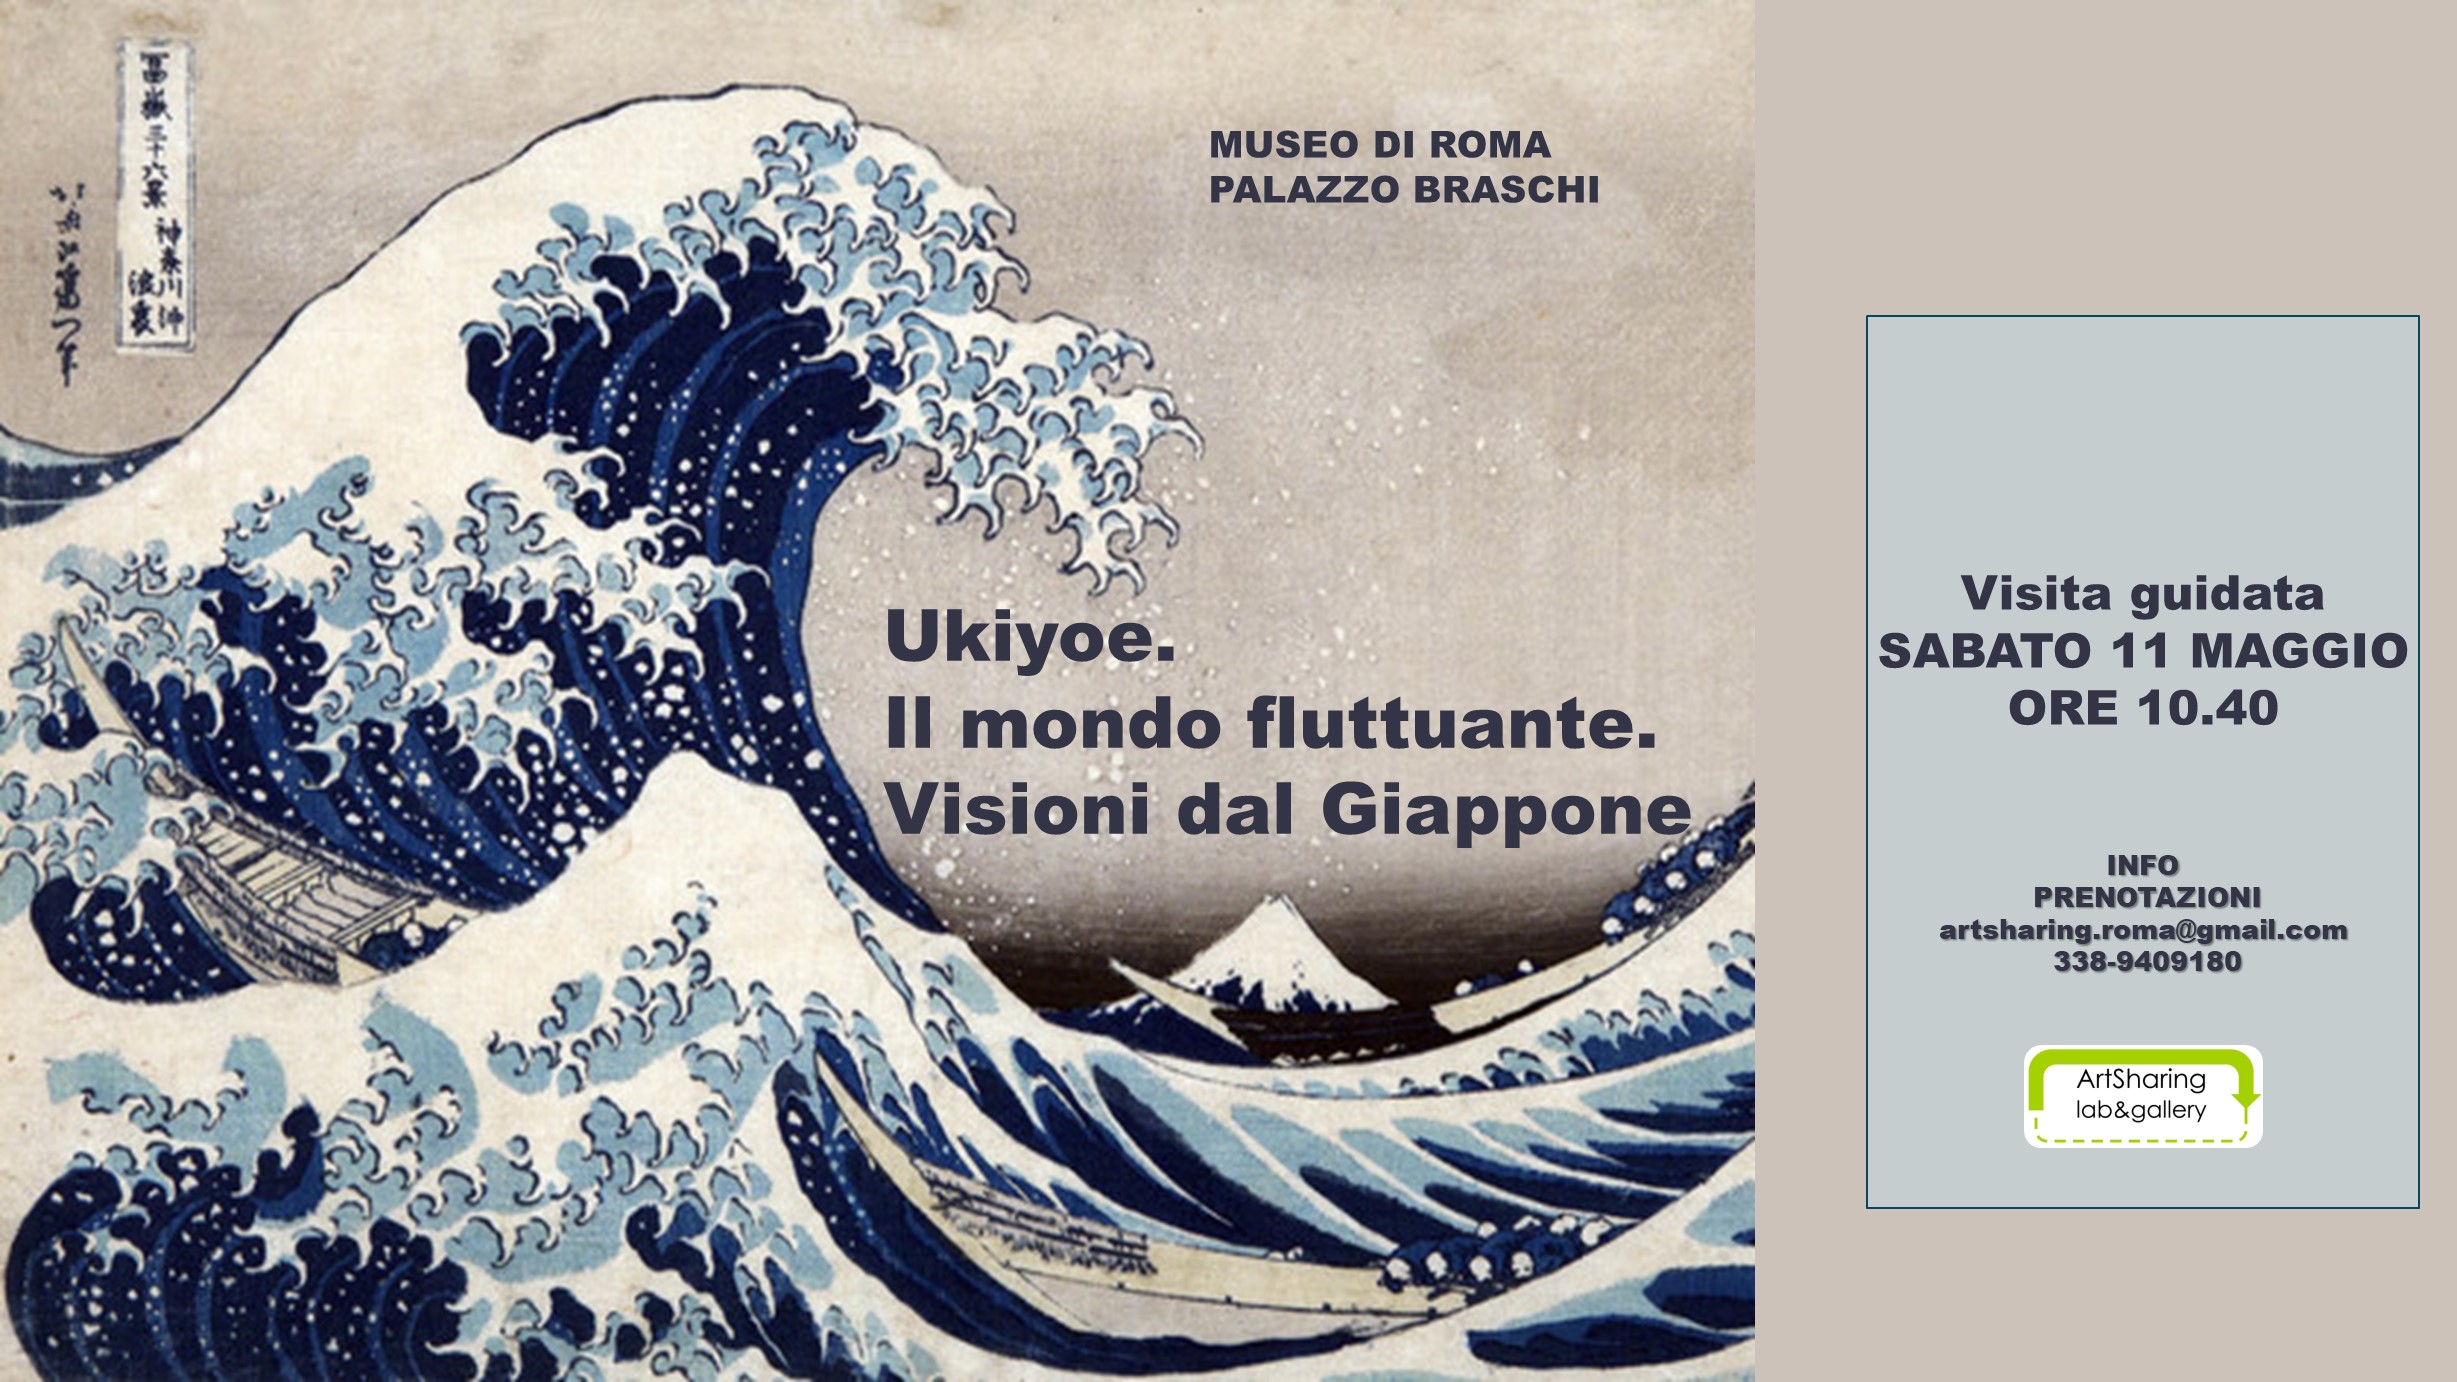 Visita guidata alla mostra Ukiyoe, arte giapponese a Palazzo Braschi